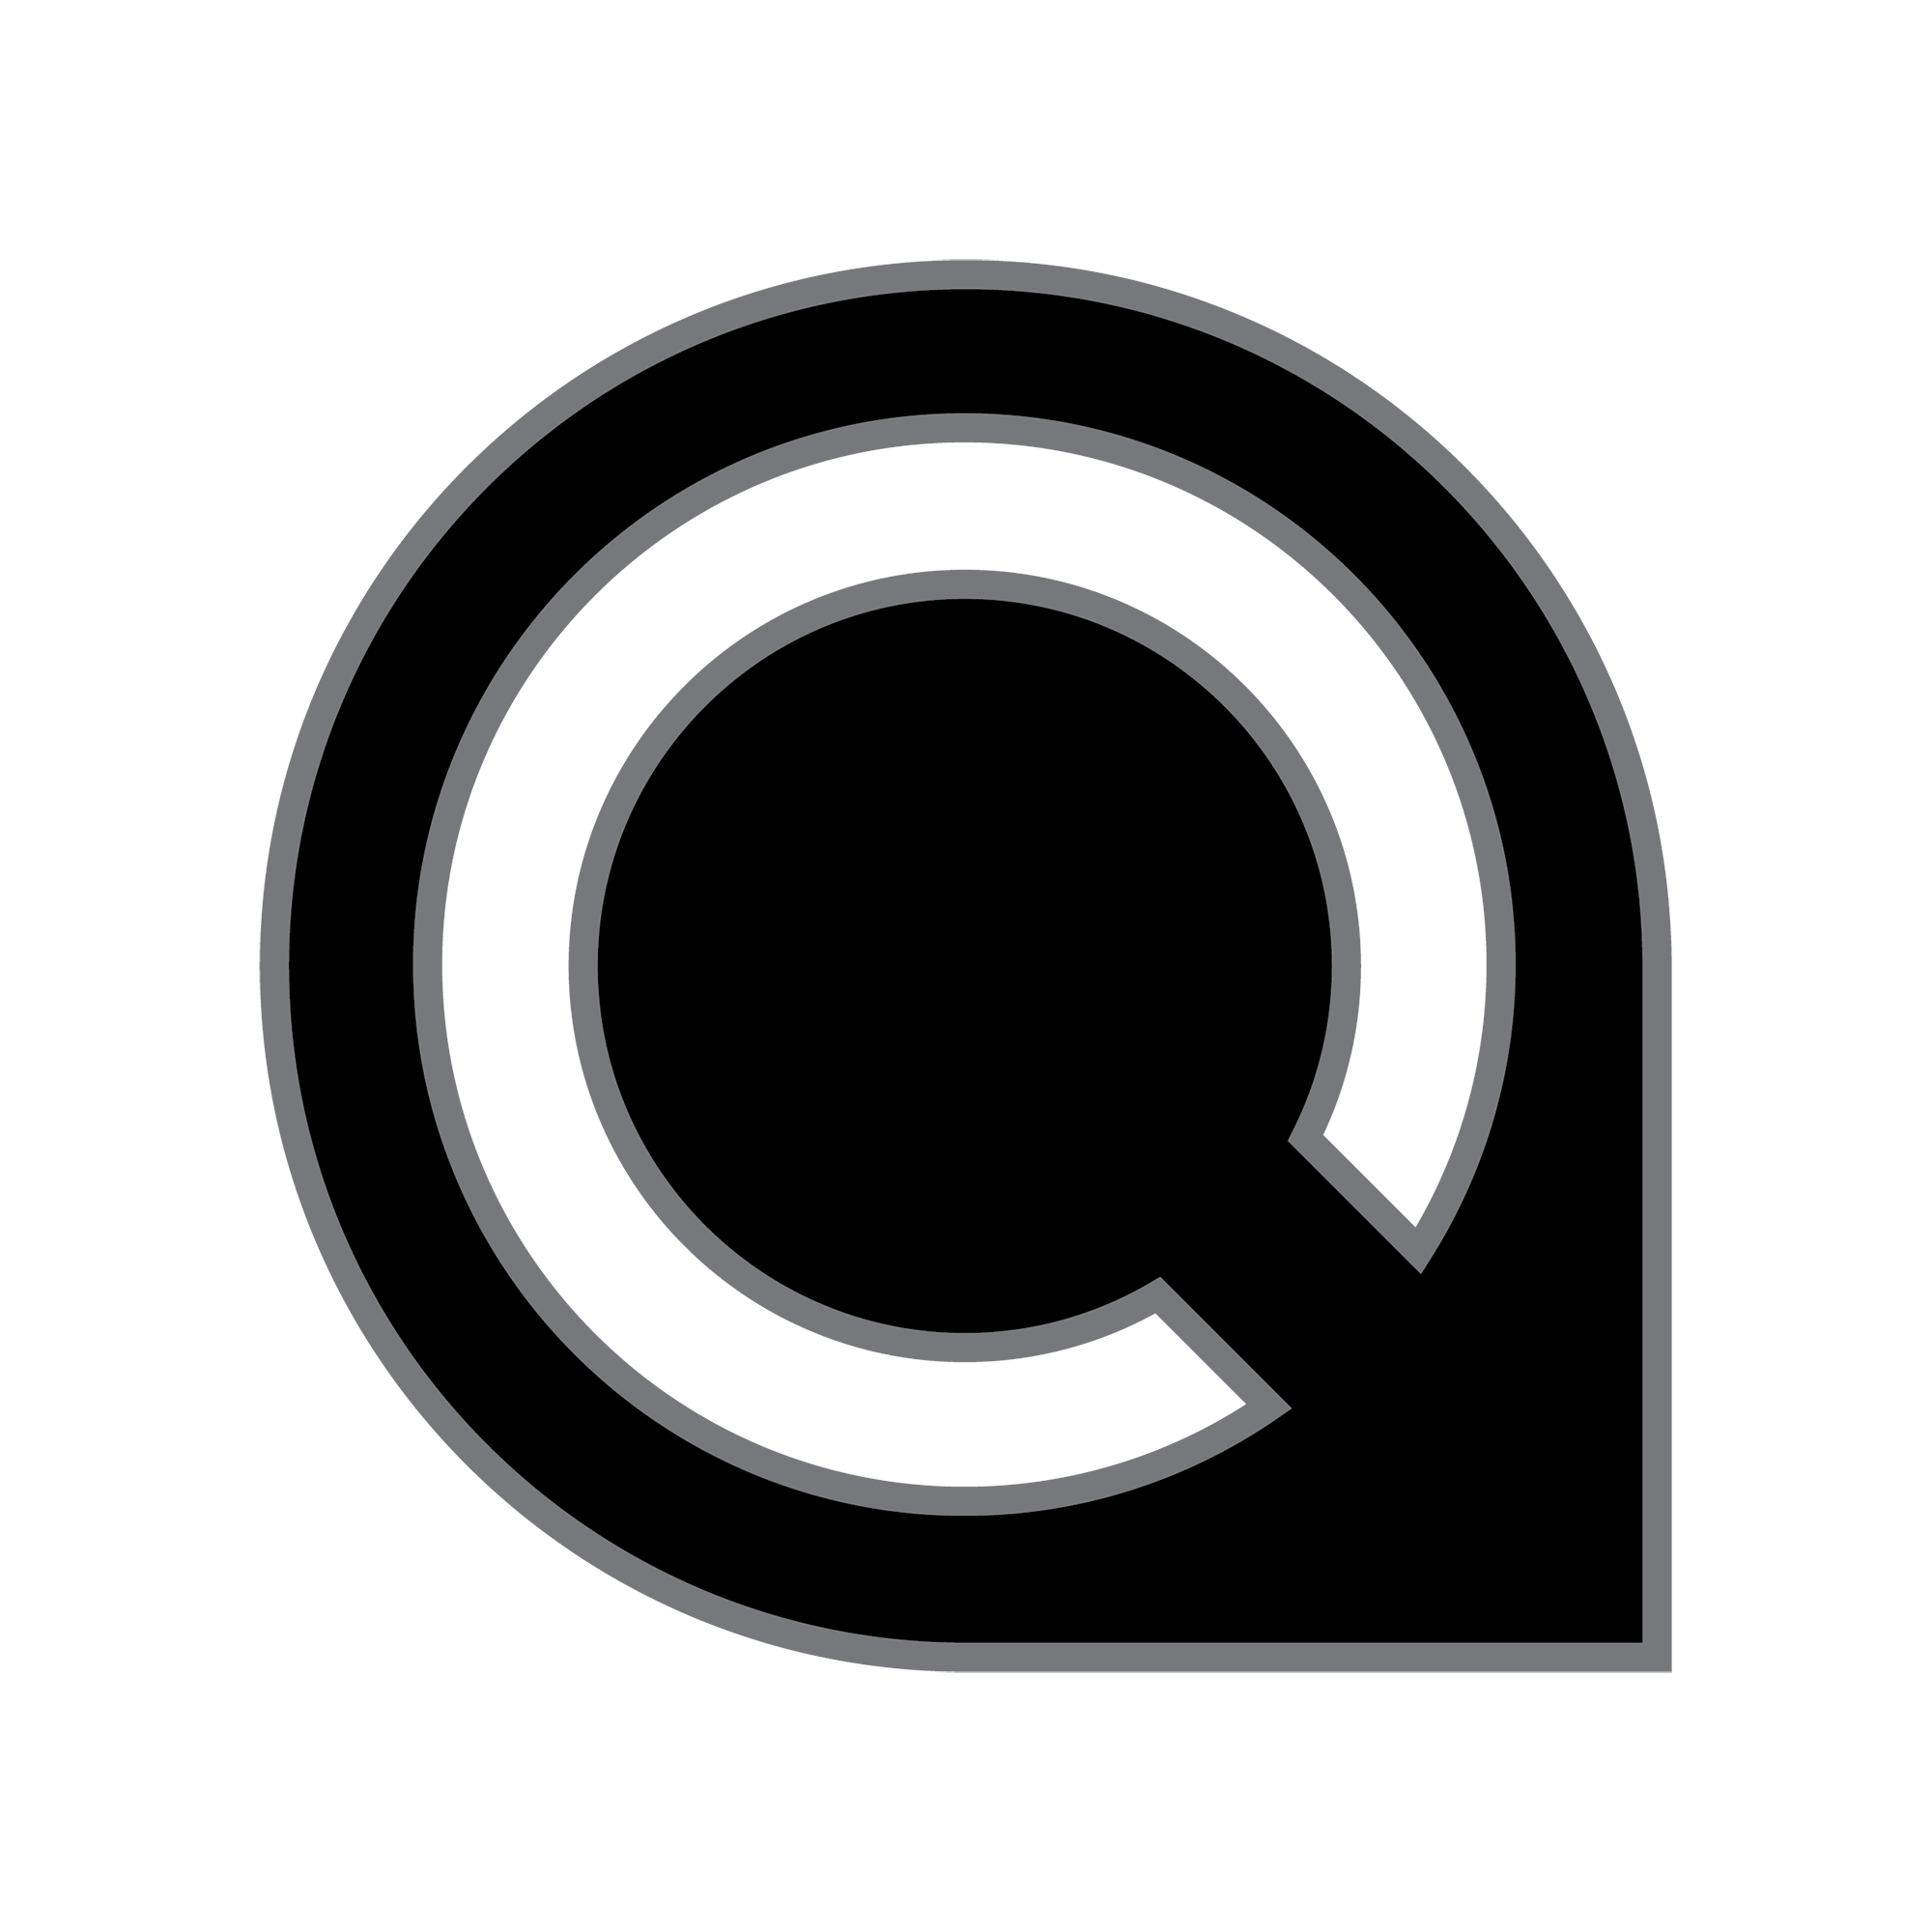 Quapler GmbH & Co. KG